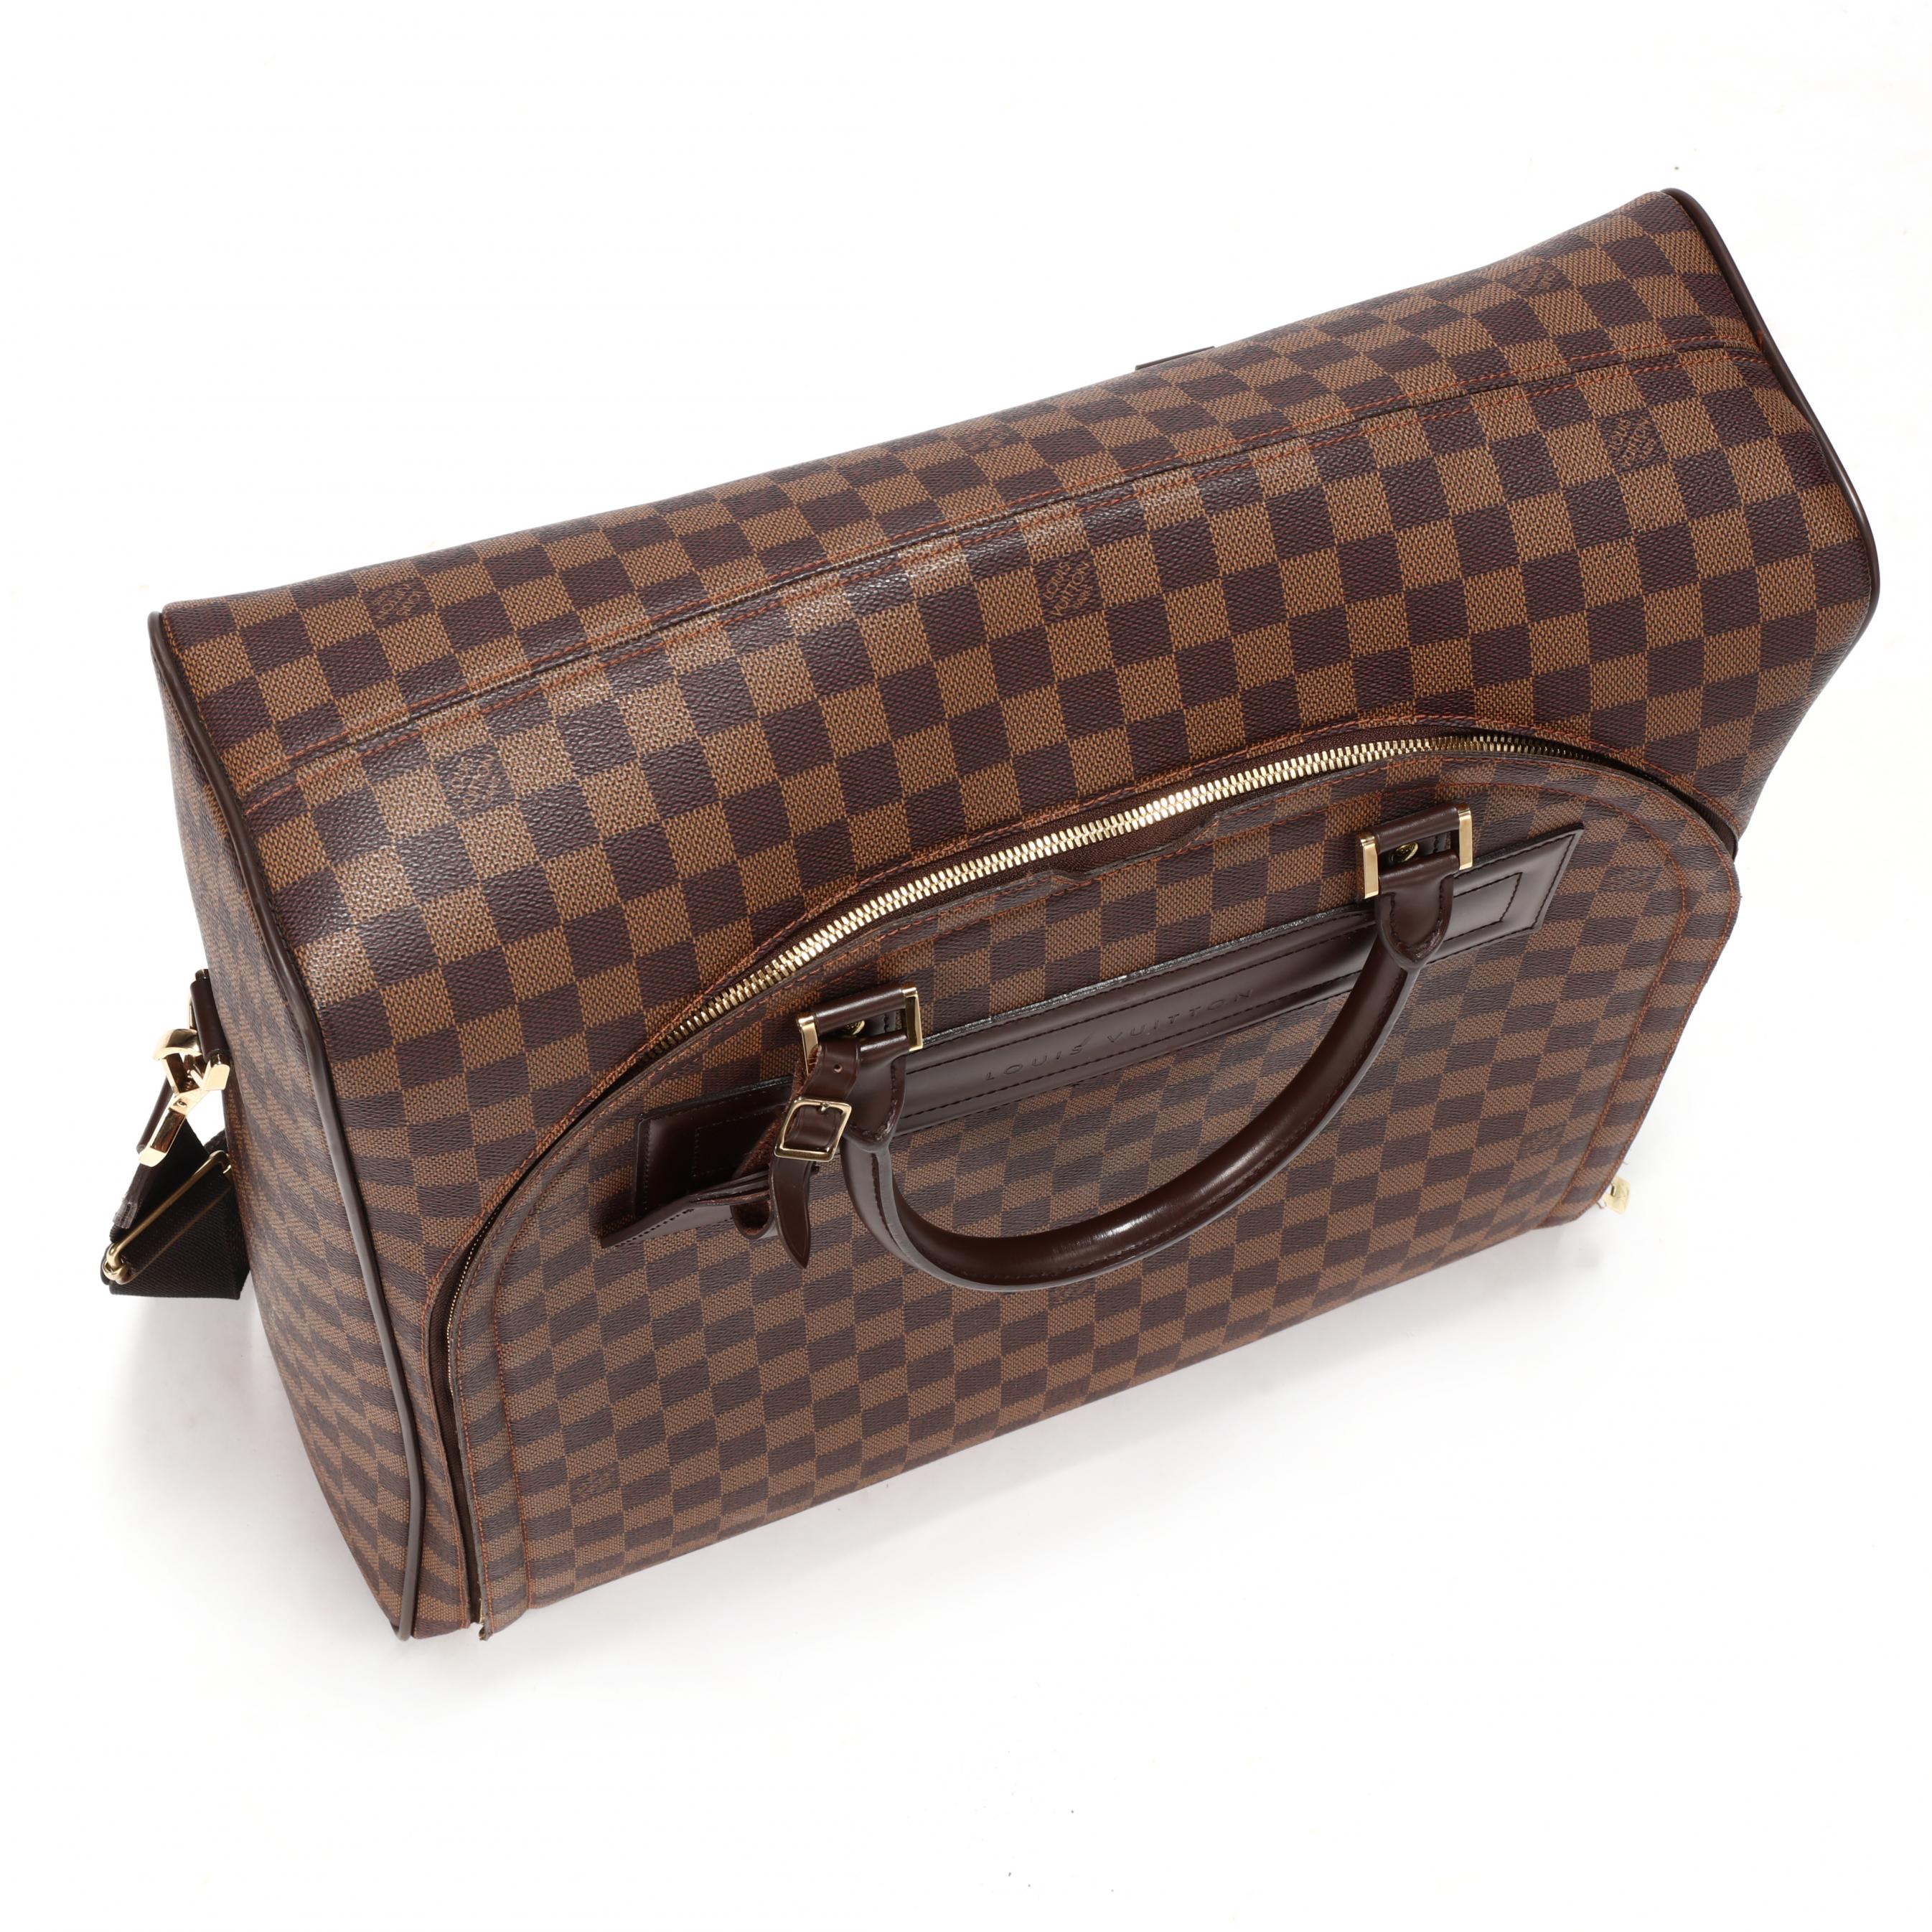 Damier Ebene Nolita Travel Bag, Louis Vuitton (Lot 141 - The